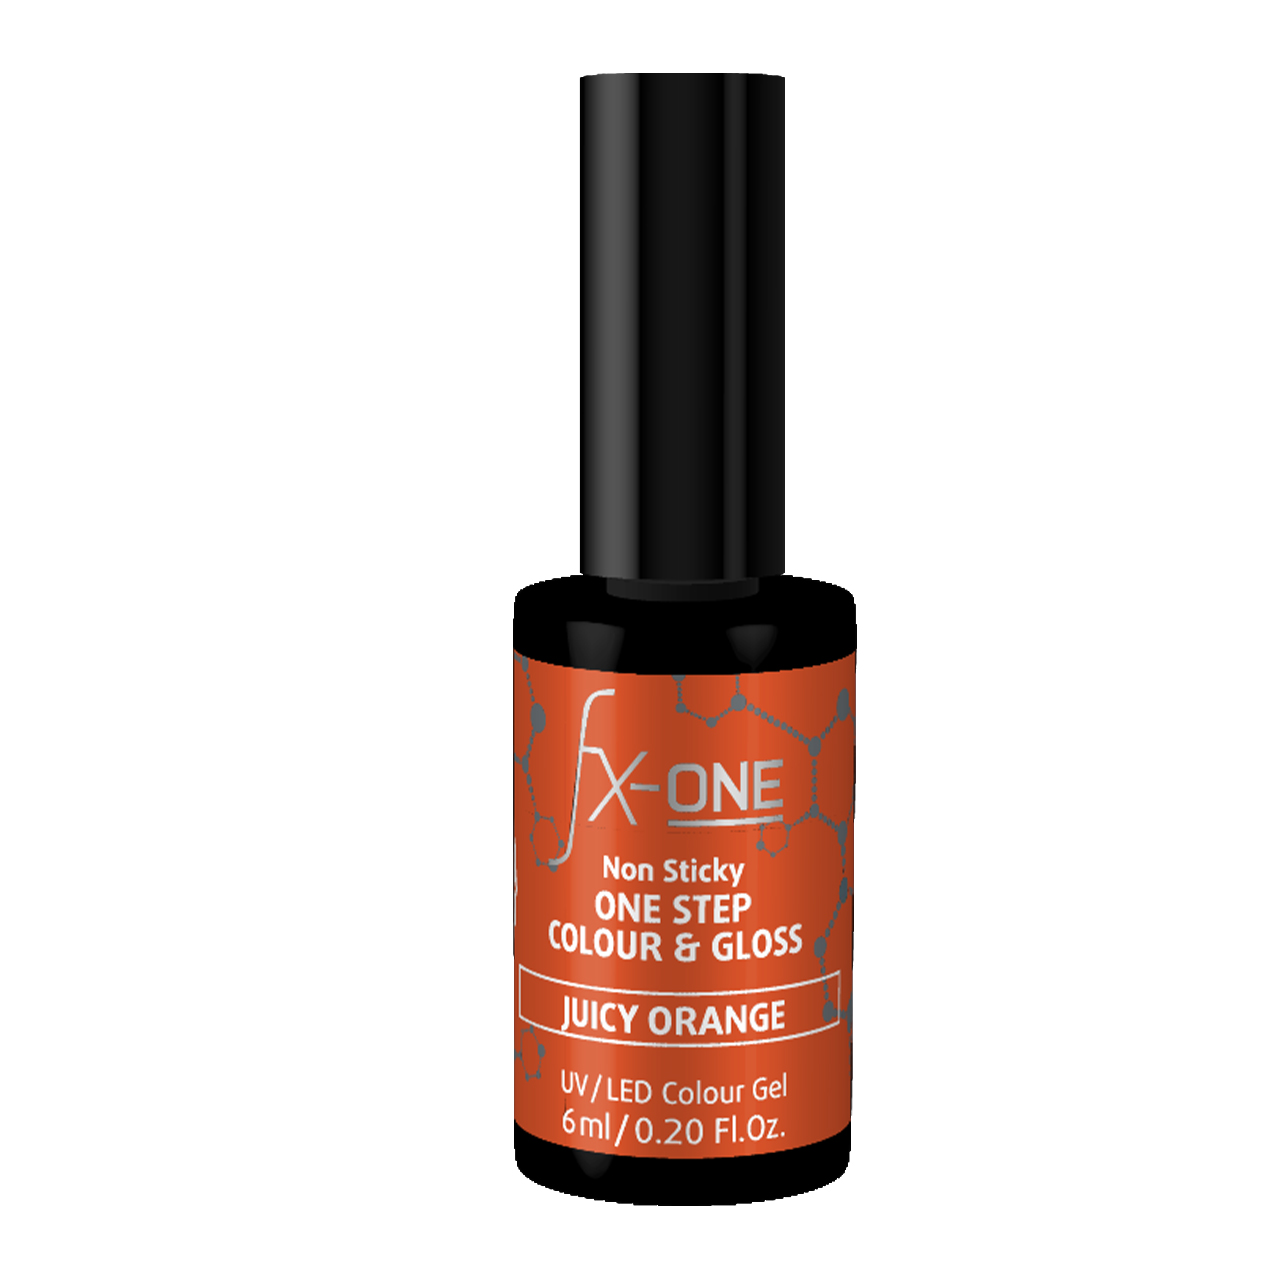 FX-ONE Colour & Gloss Juicy Orange 6ml